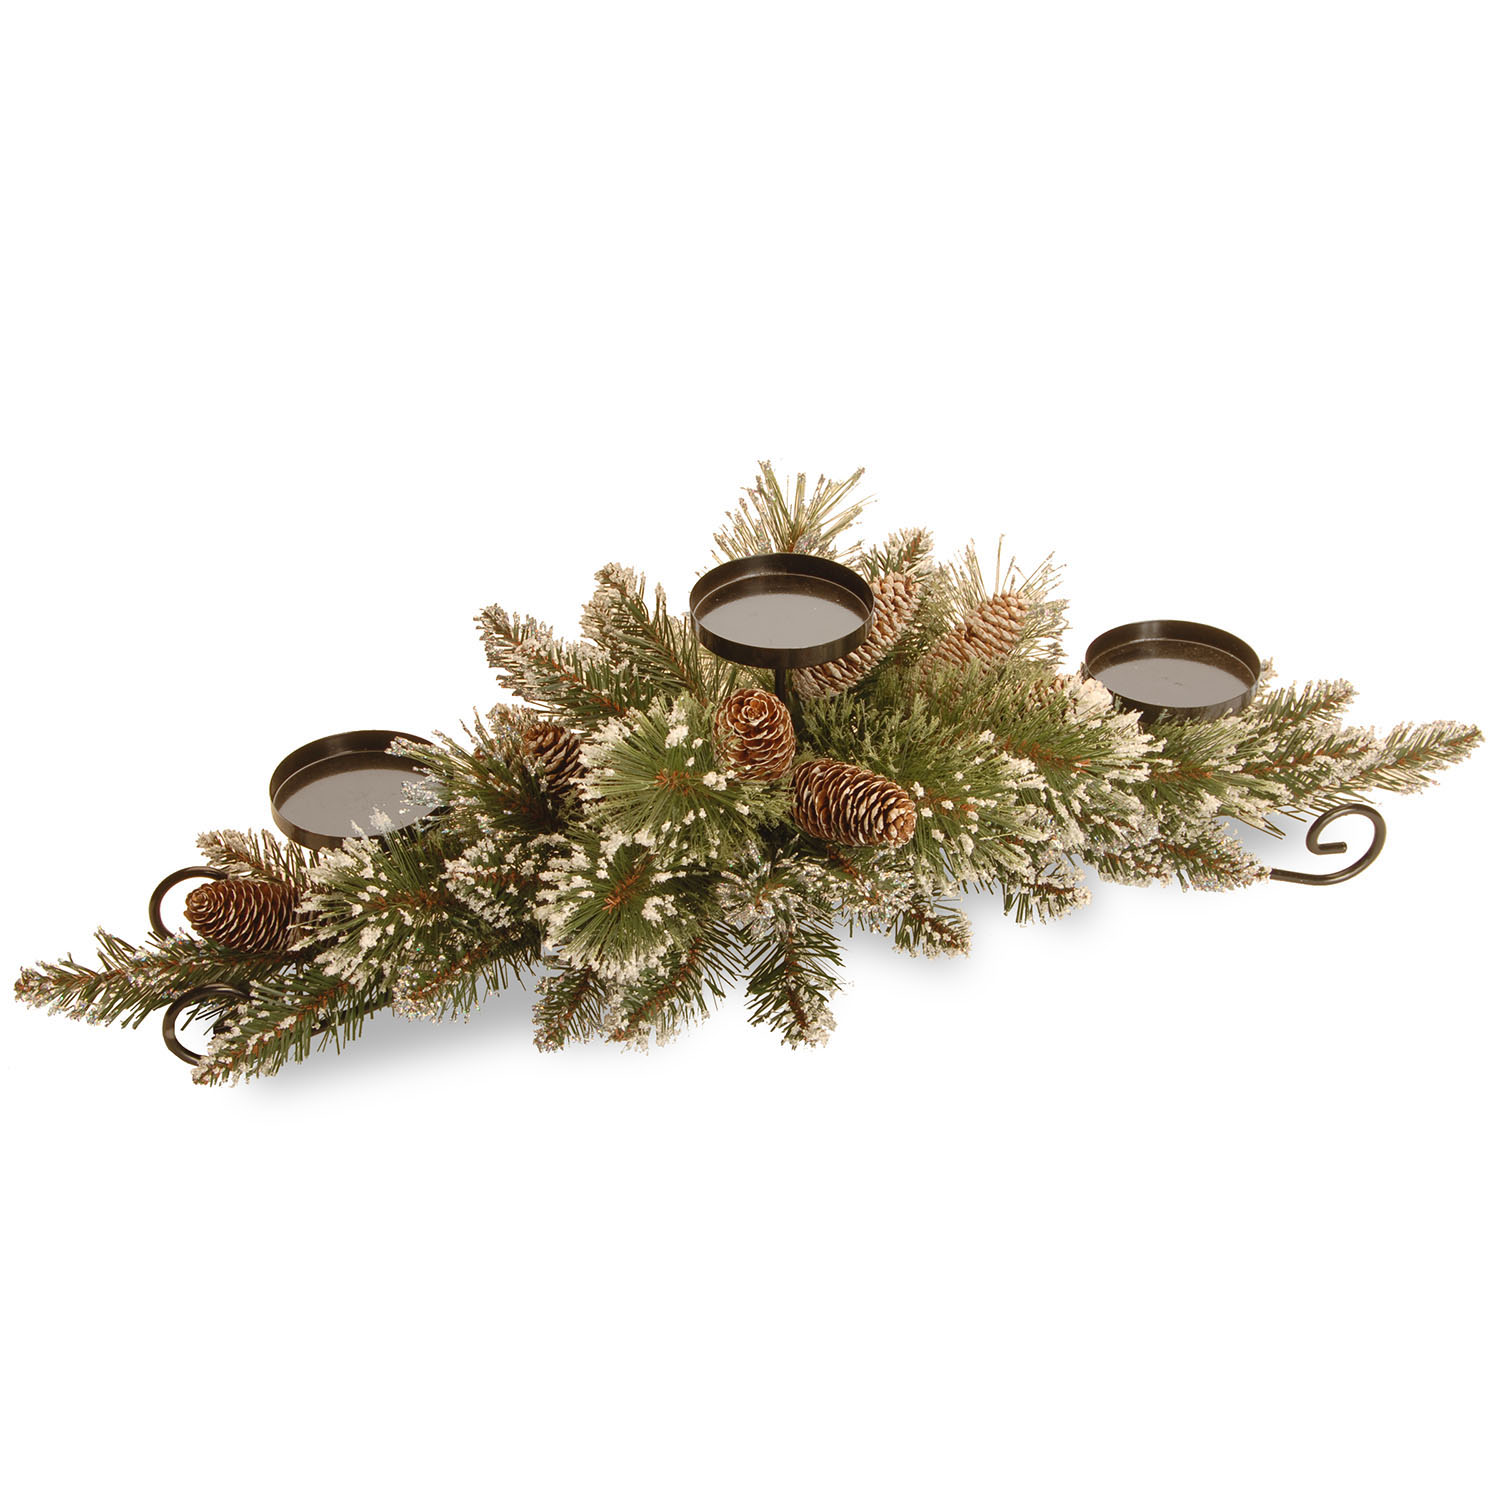 30 Inch Glittery Bristle Pine Centerpiece: 3 Candle Holders/cones